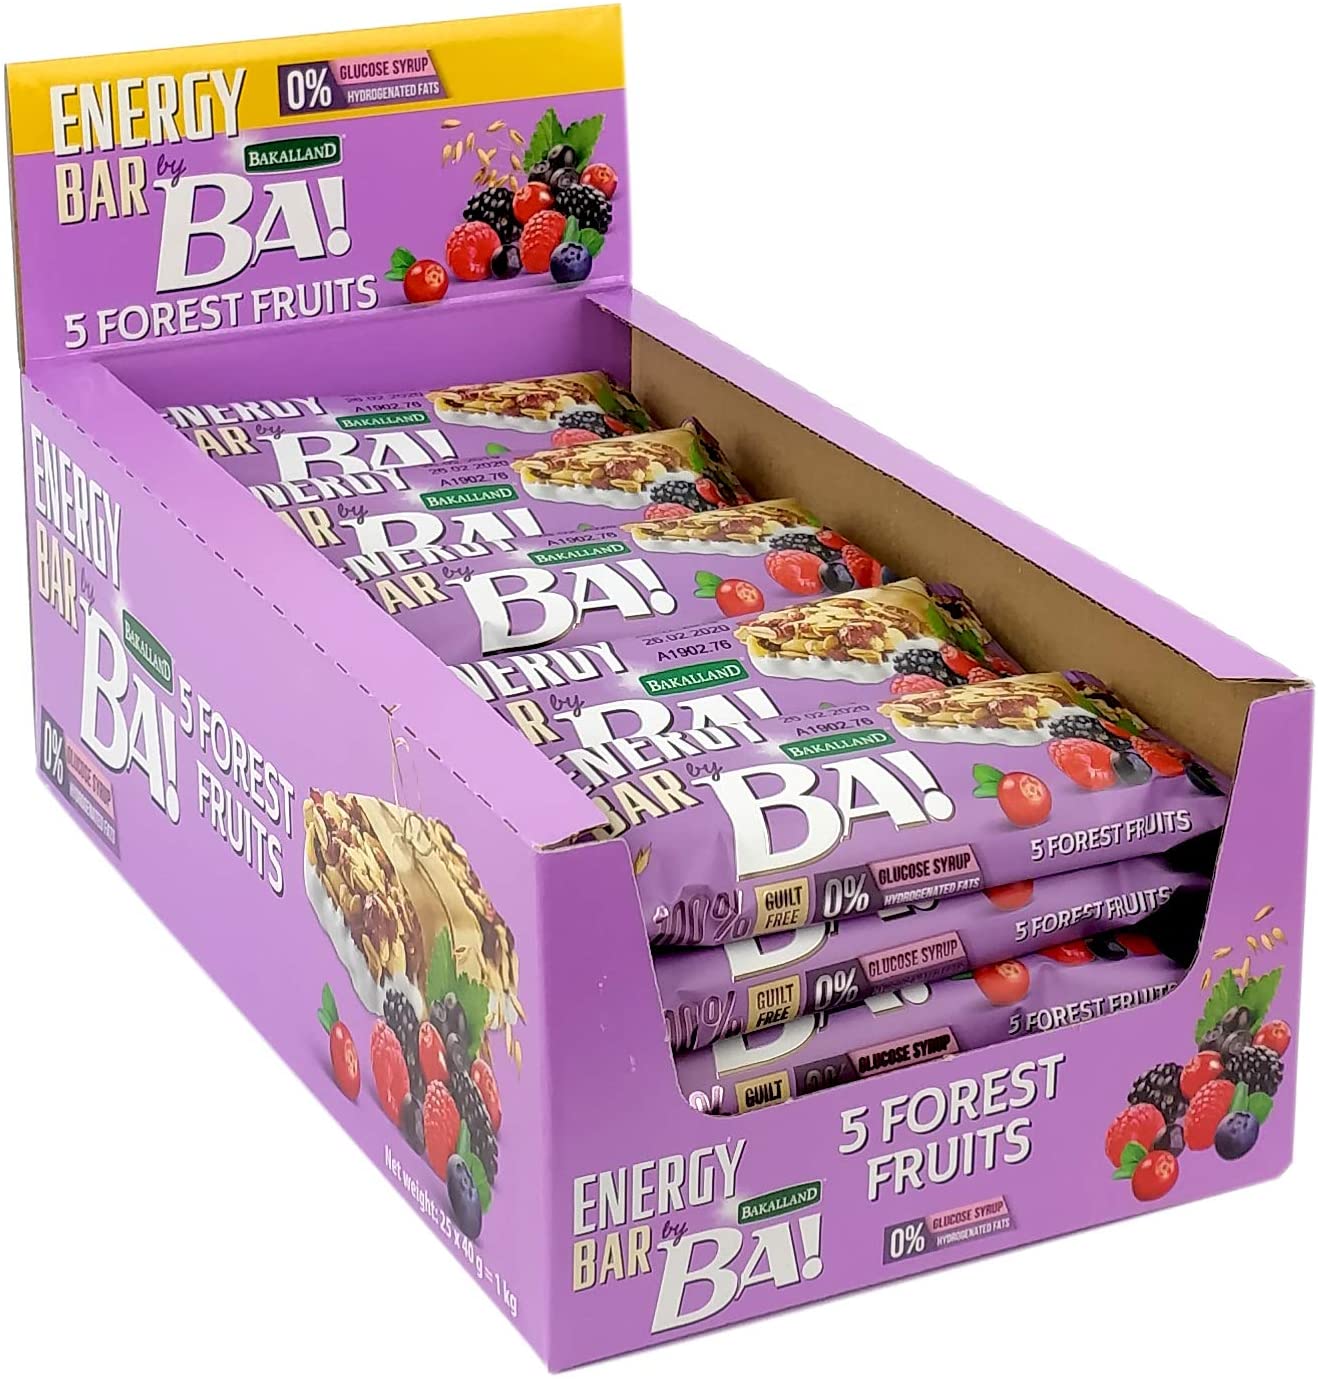 Ba Energy Bar No Sugar 5 Forest Fruits 40g - 1pack